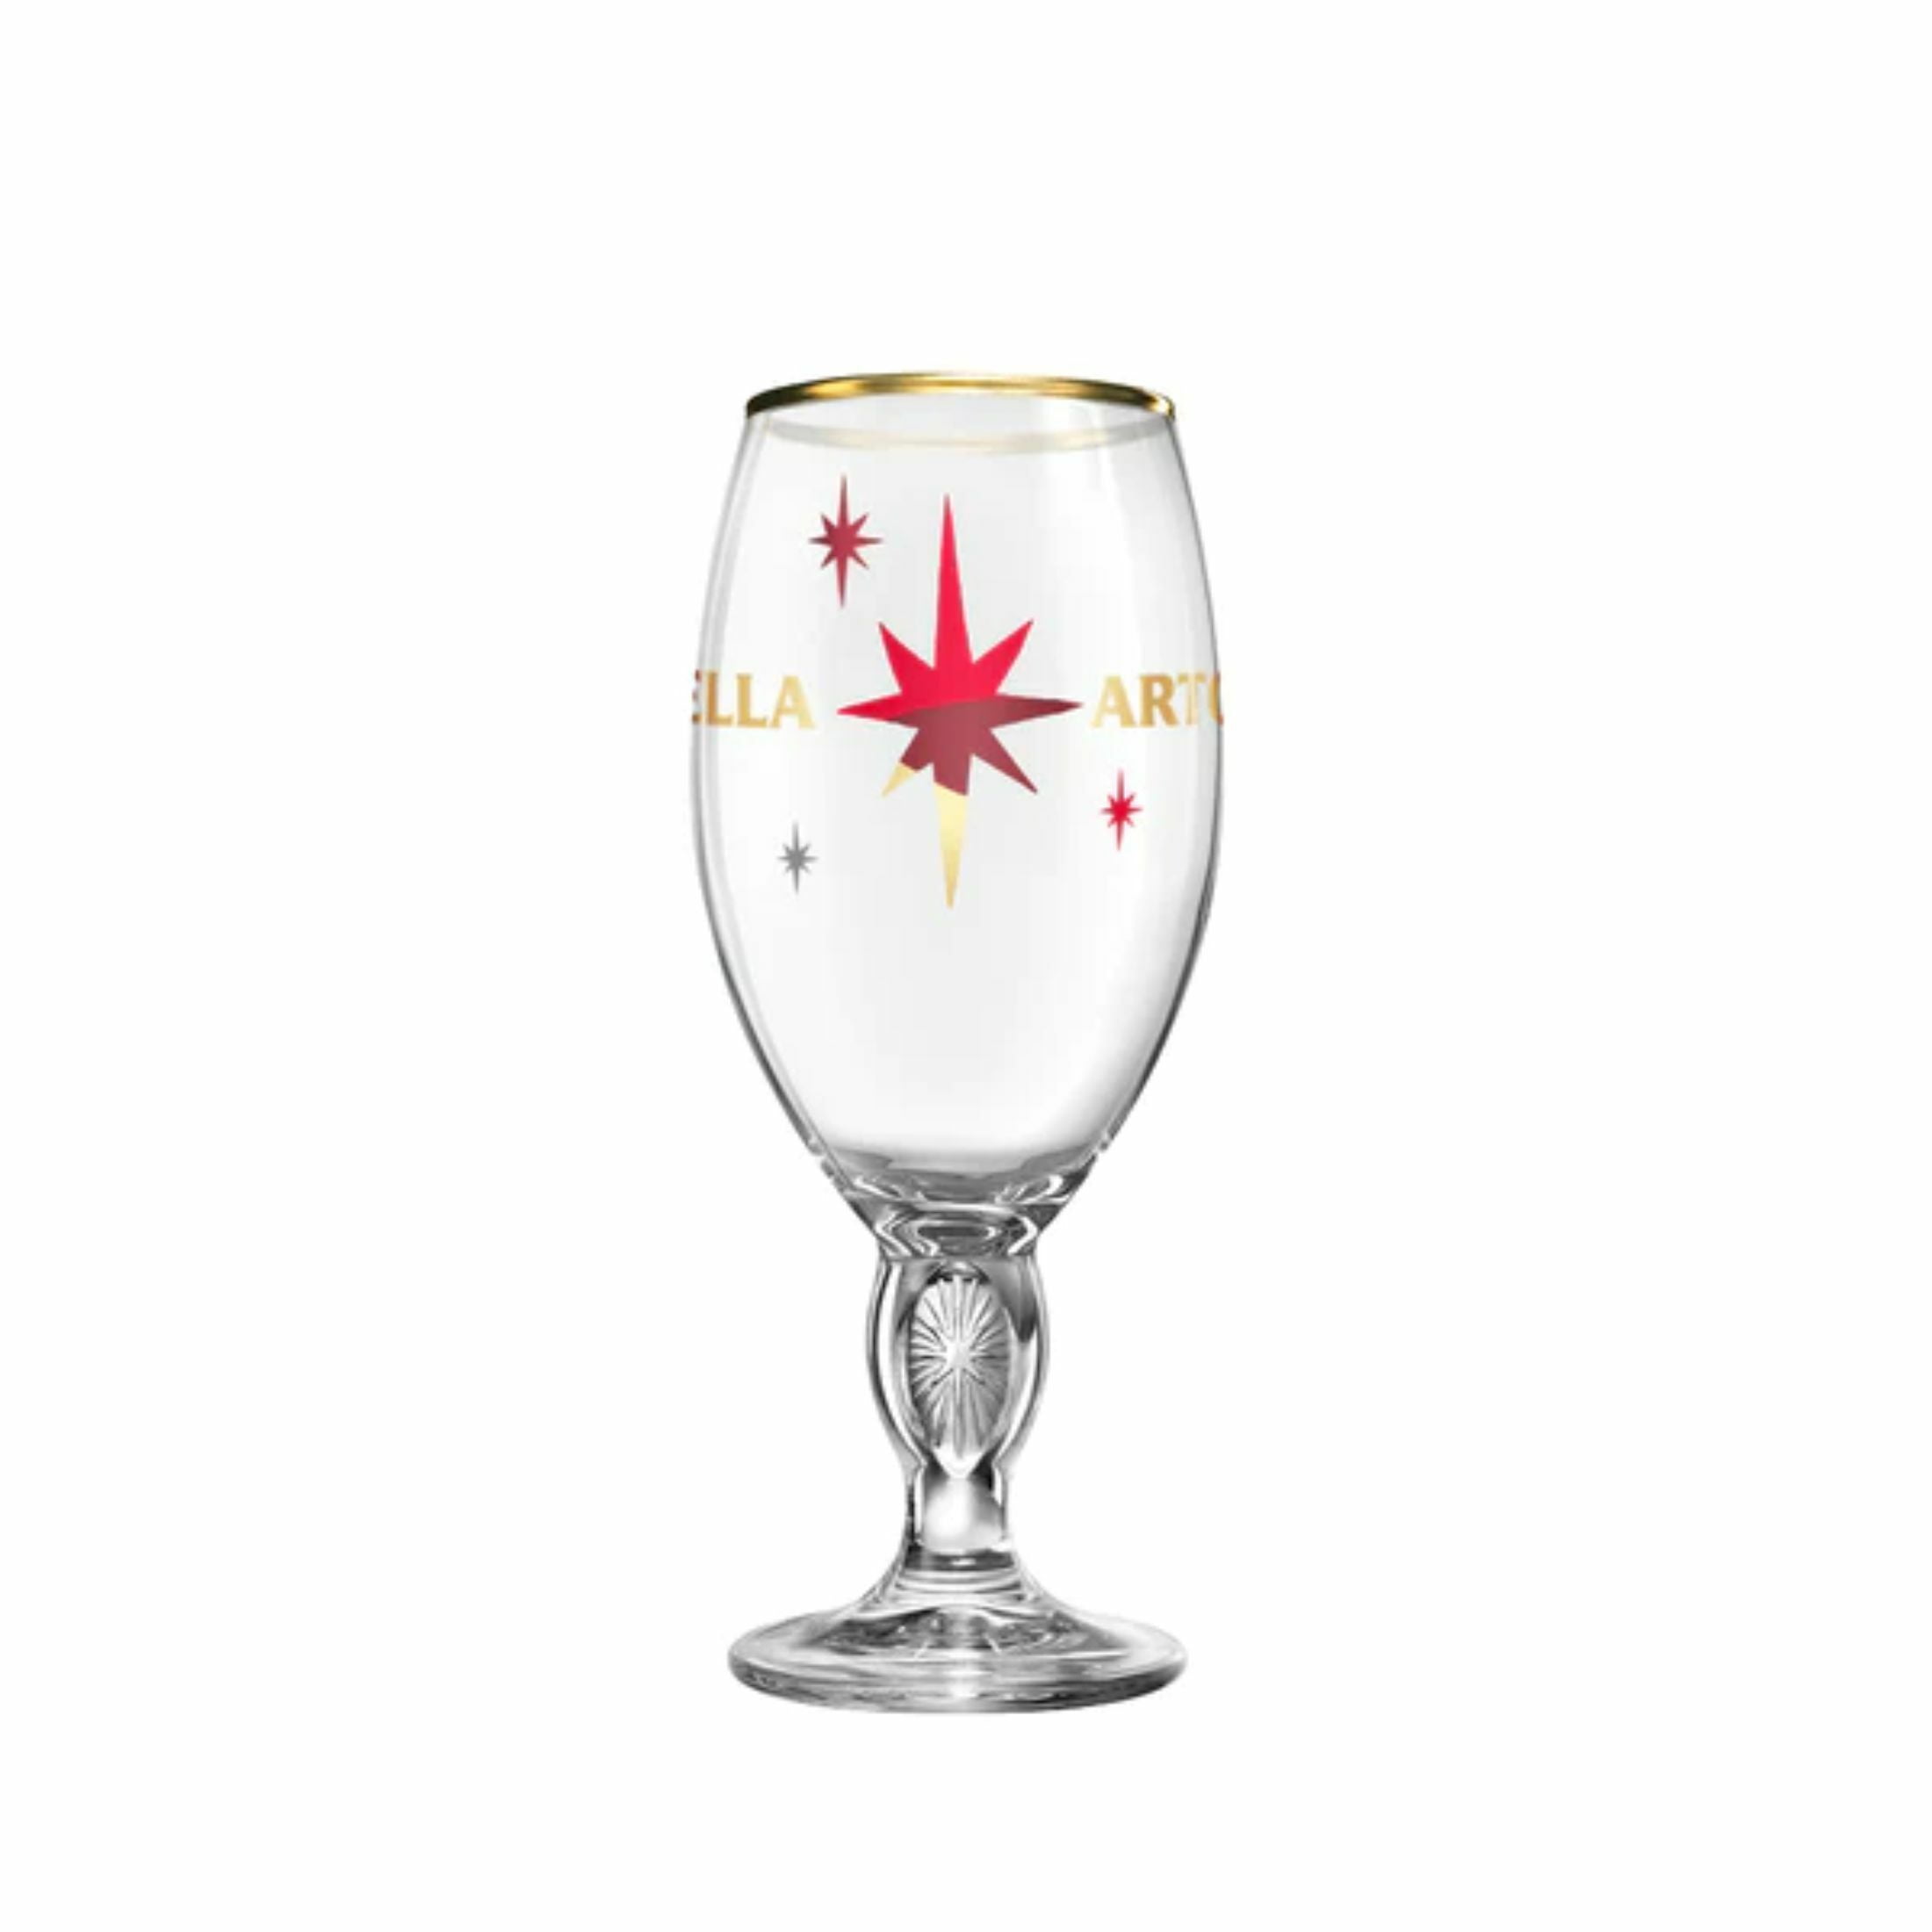 Stella Artois Beer Chalice Glass 12 fl oz Buy a Lady a Drink 2015 NEW